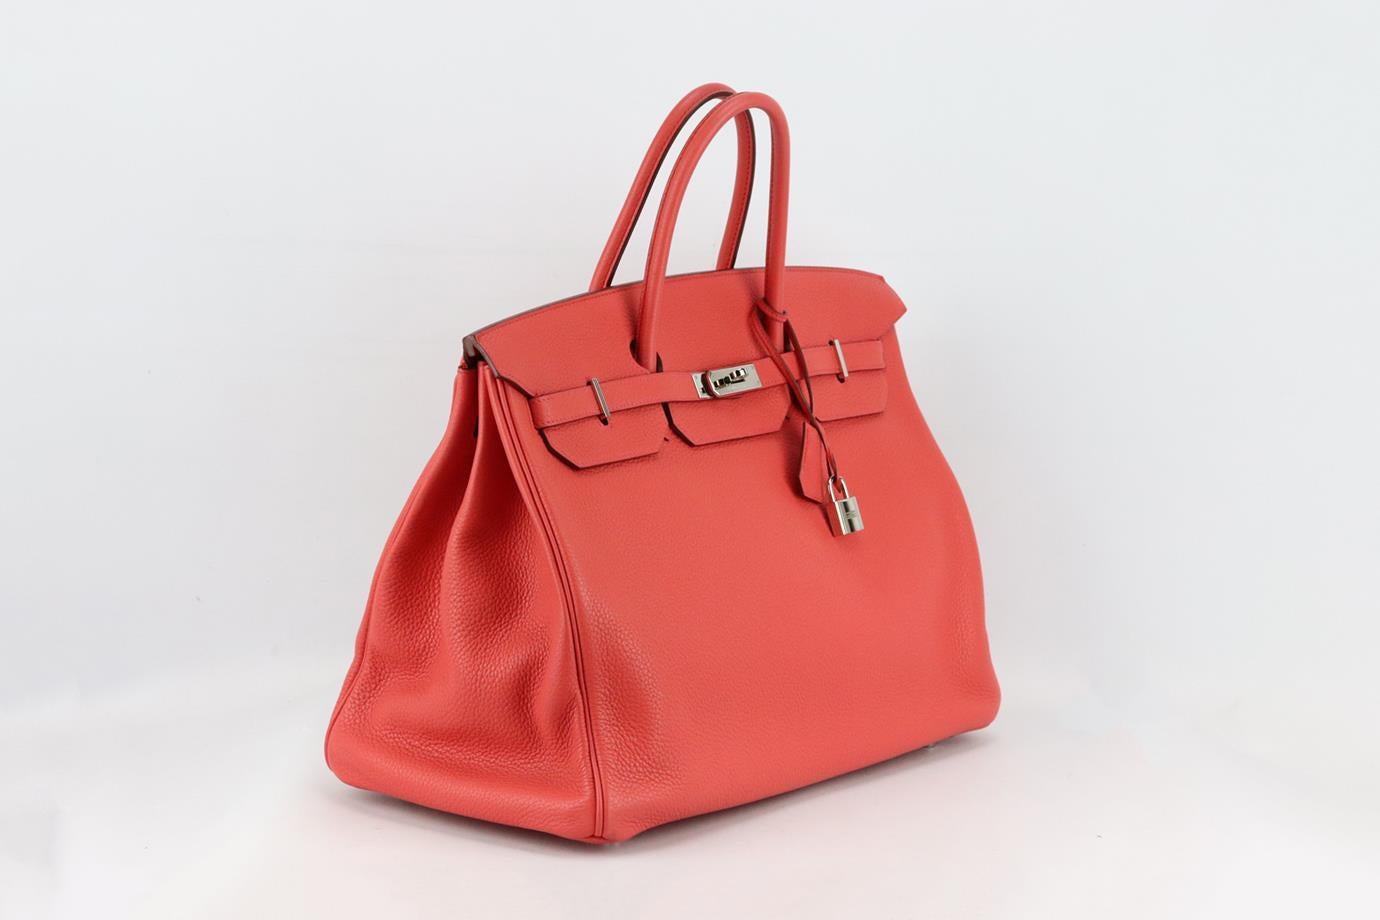 Hermès 2010 Birkin 40cm Togo Leather Bag en vente 4